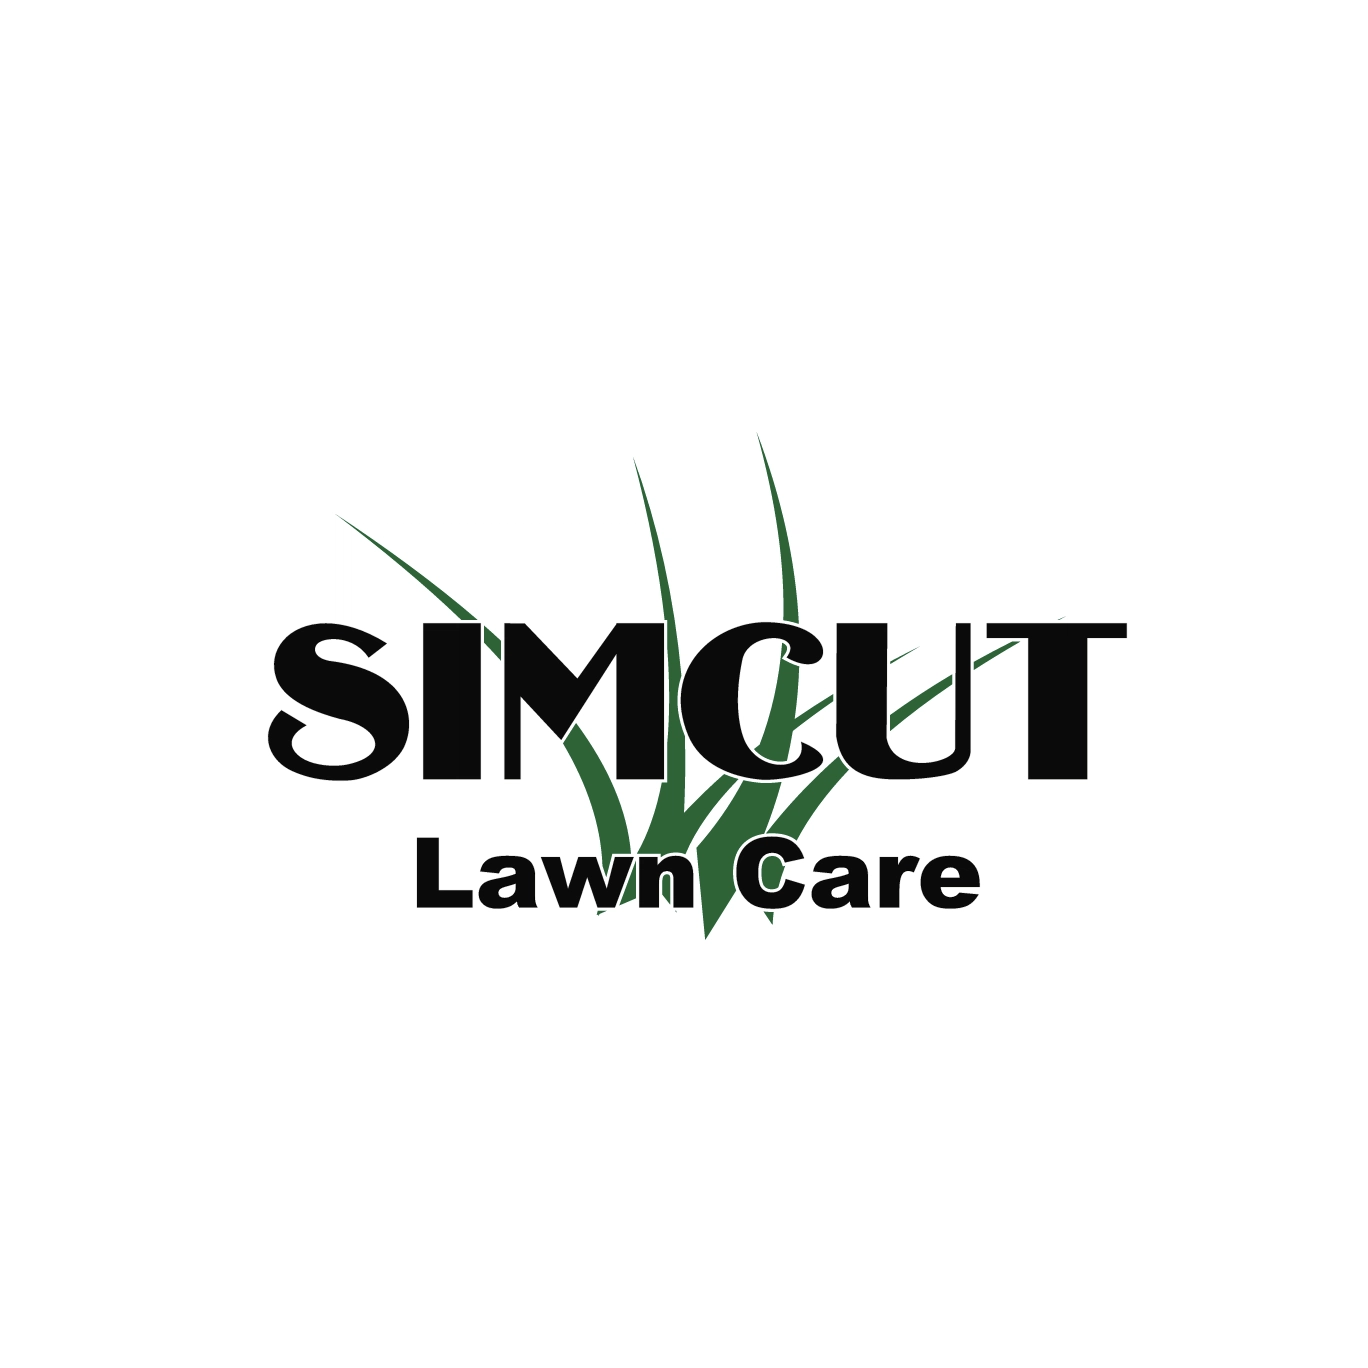 Simcut Lawn Care Logo